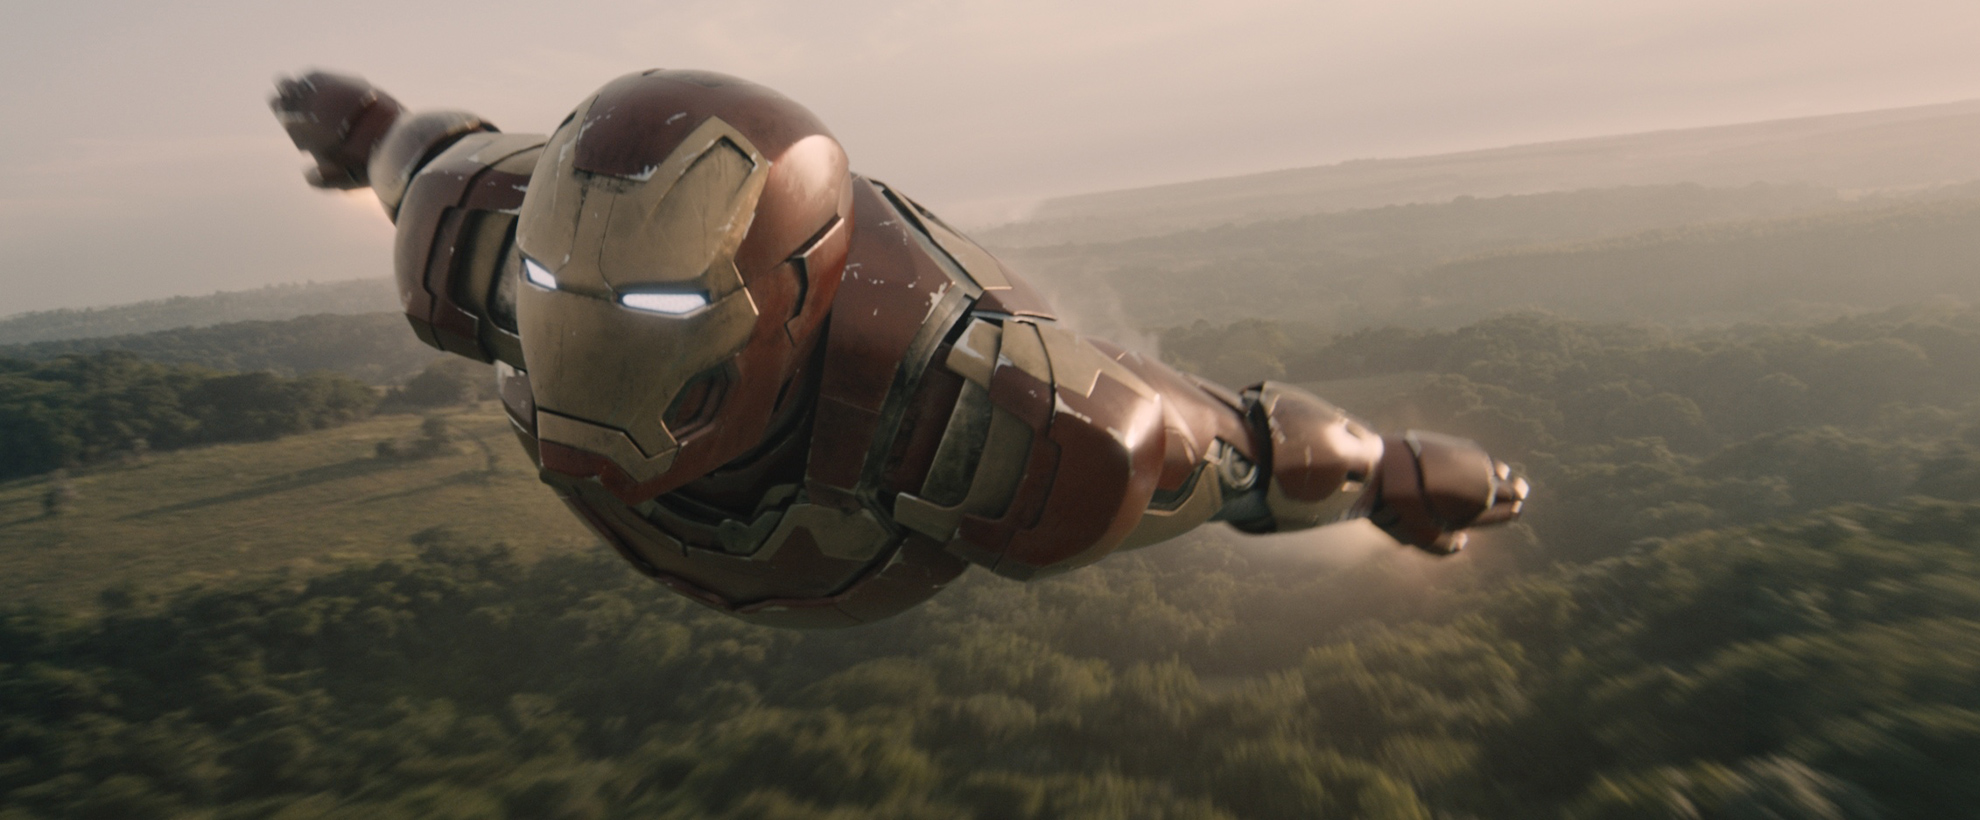 Iron Man soars in the sky